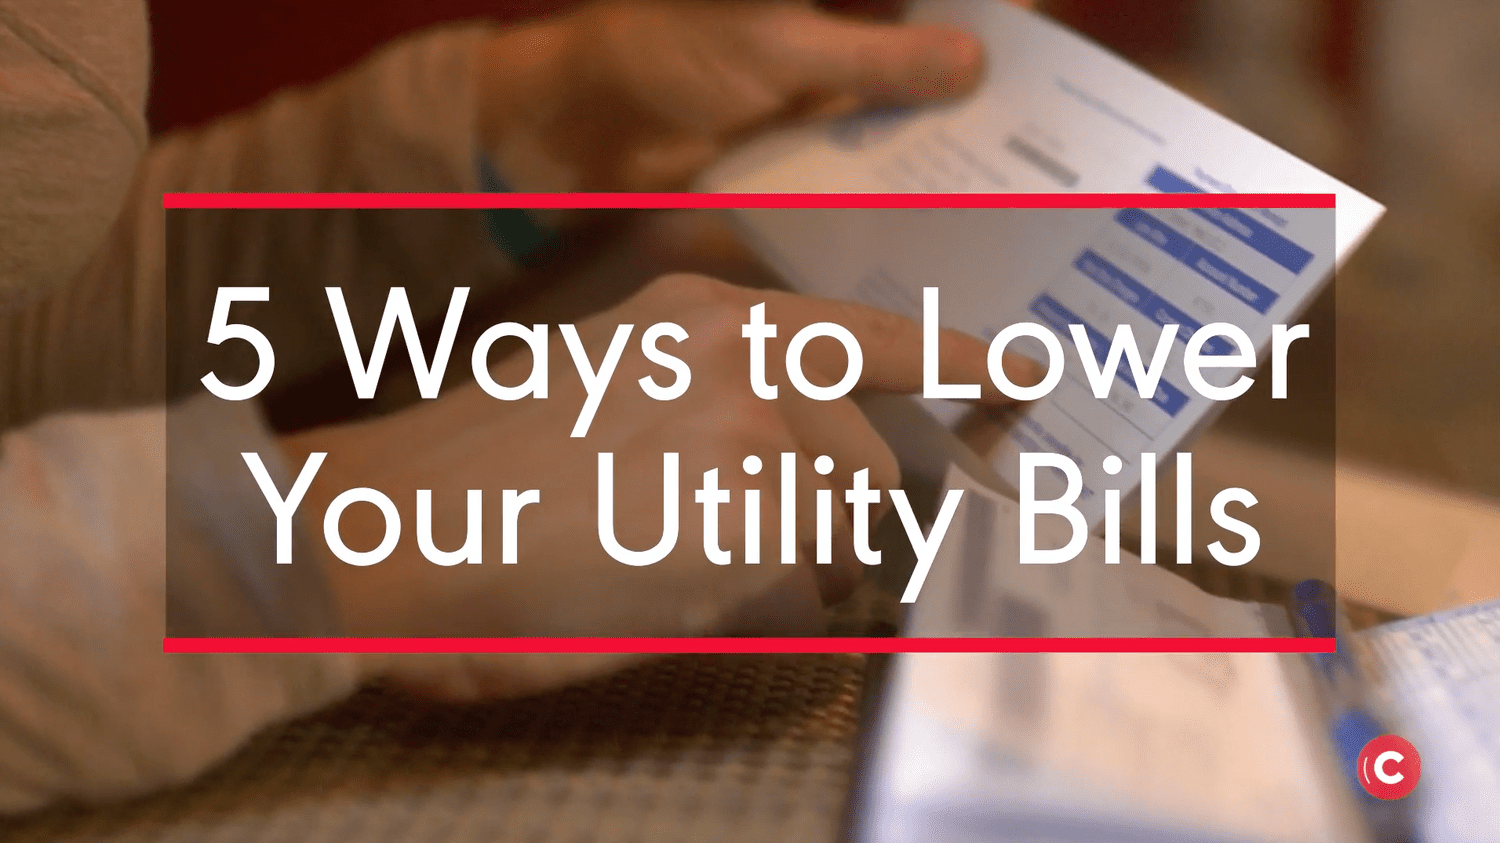 5 Ways to Lower Your Utility Bills